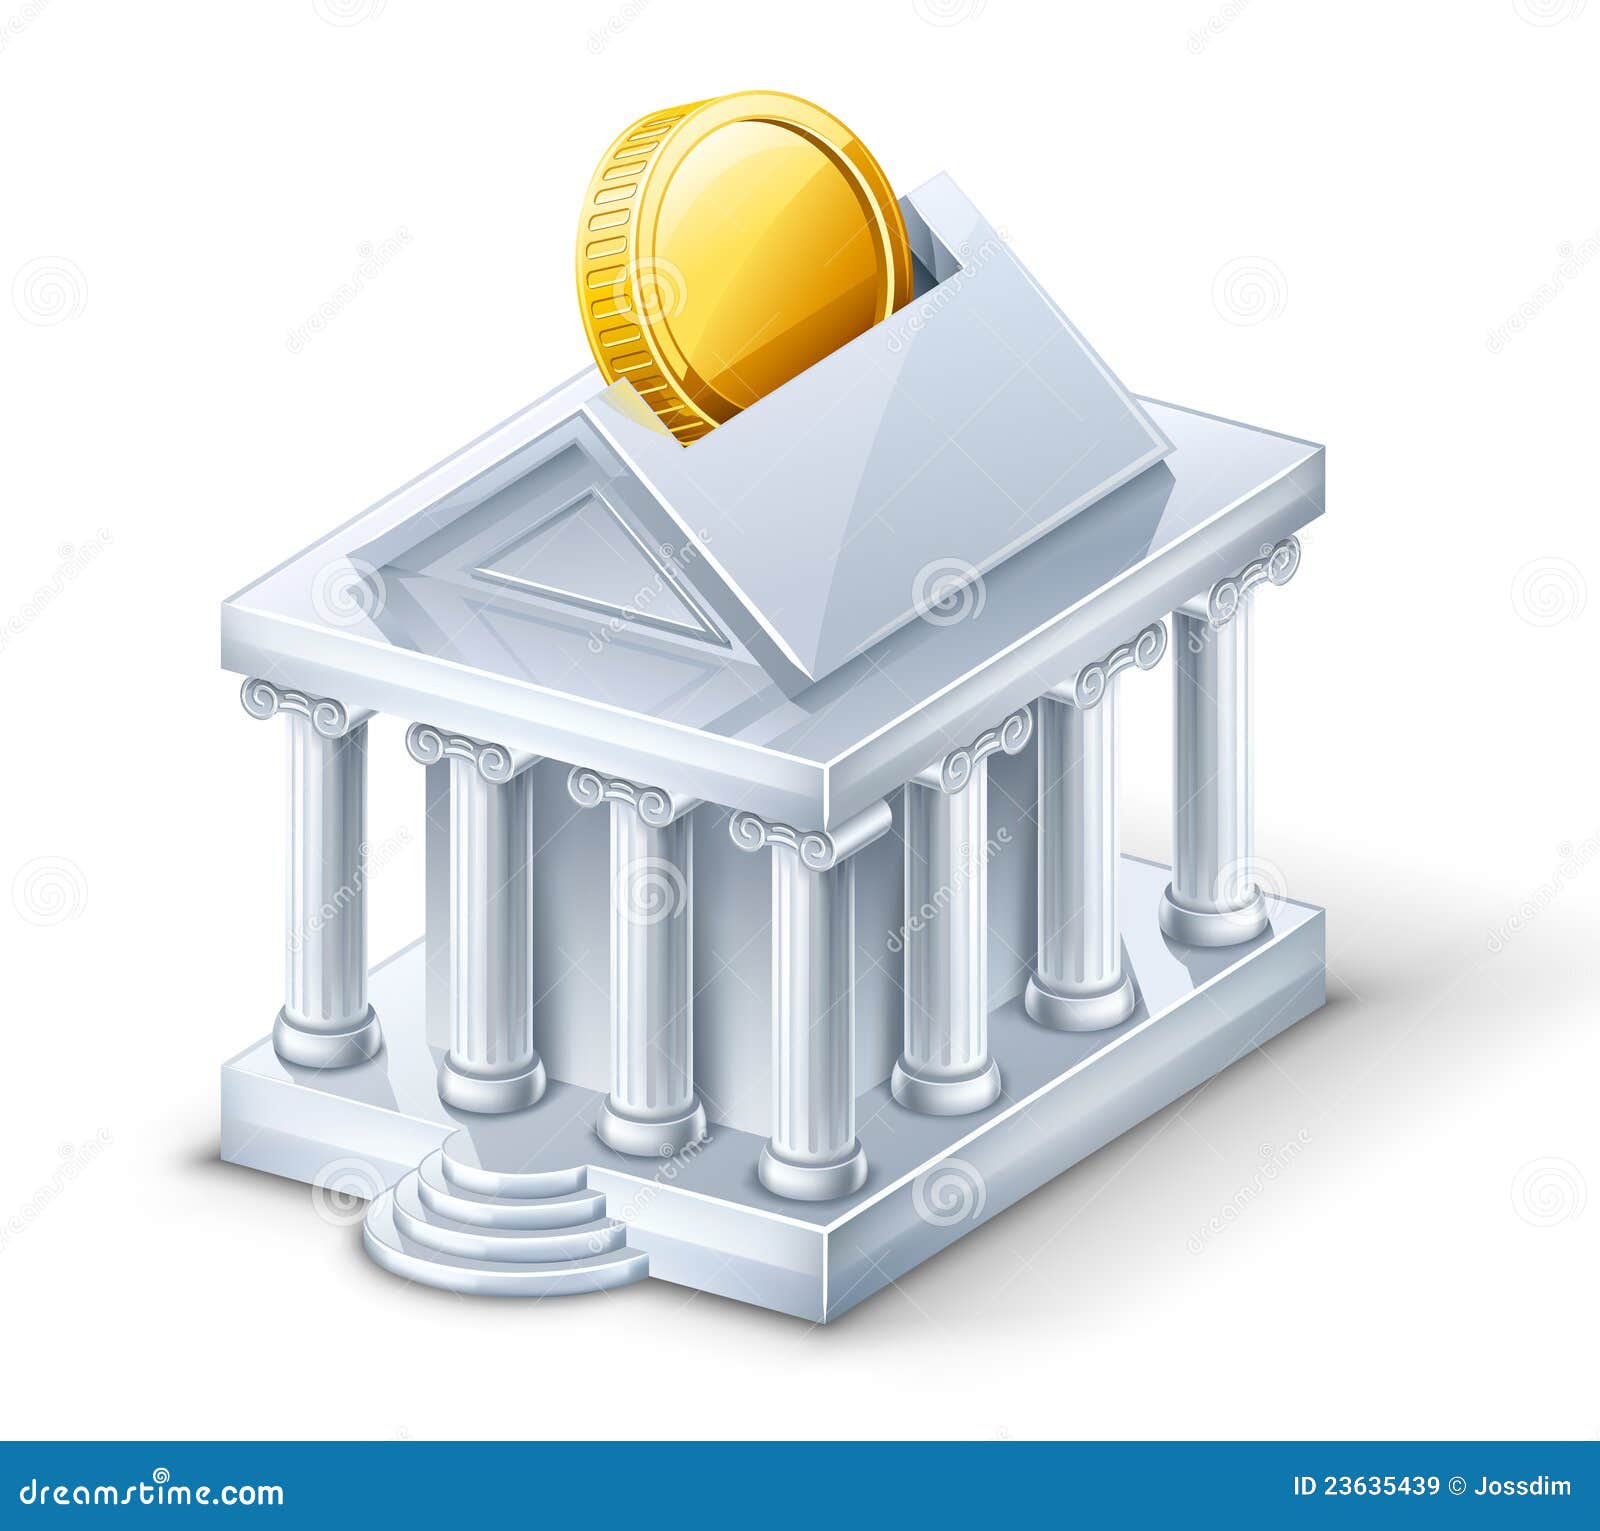 bank building Ã¢â¬â moneybox